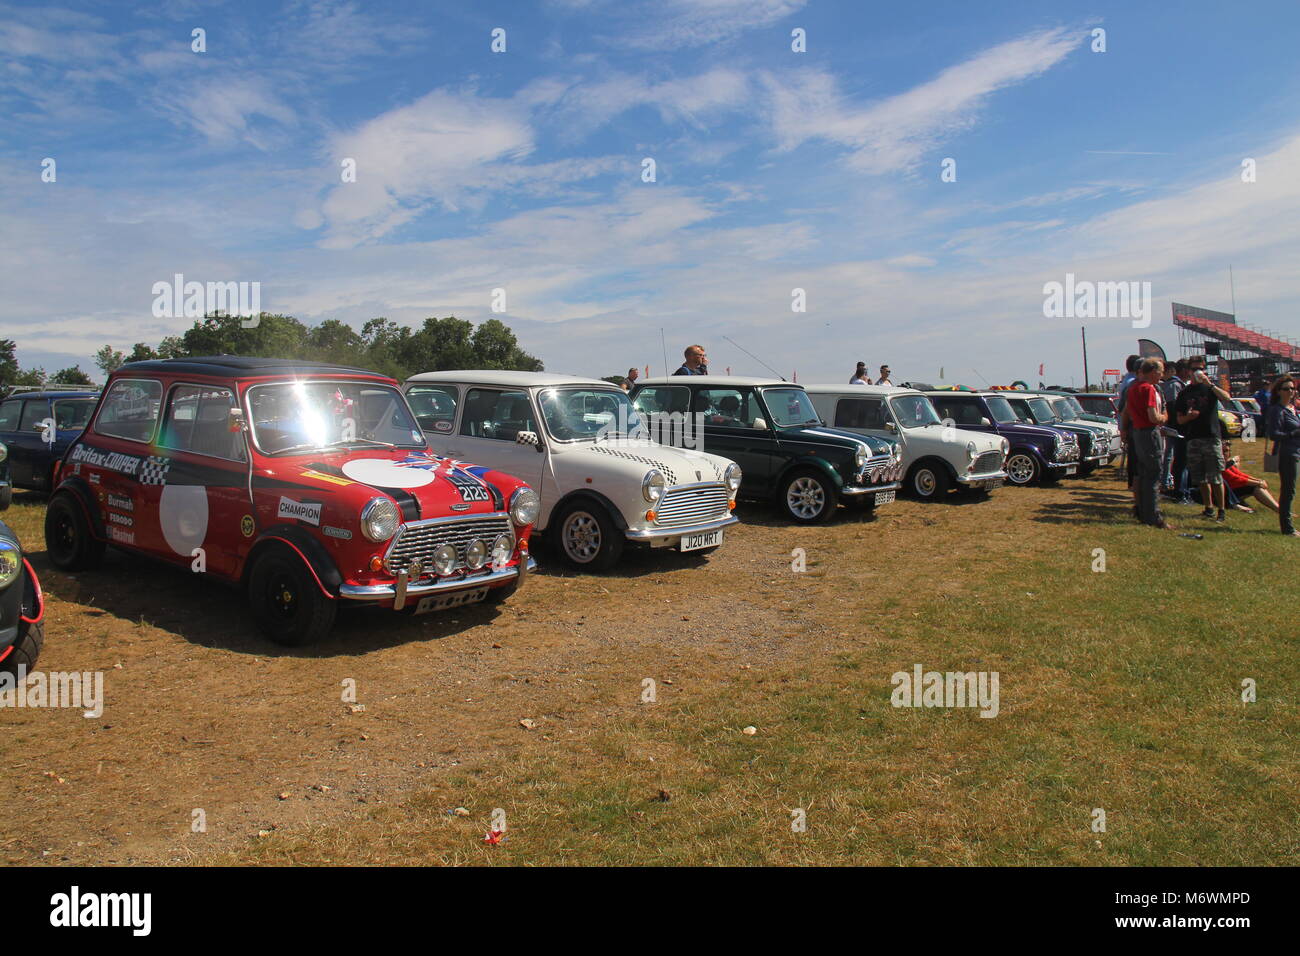 Mini Festival At Brands Hatch June 2015 Stock Photo